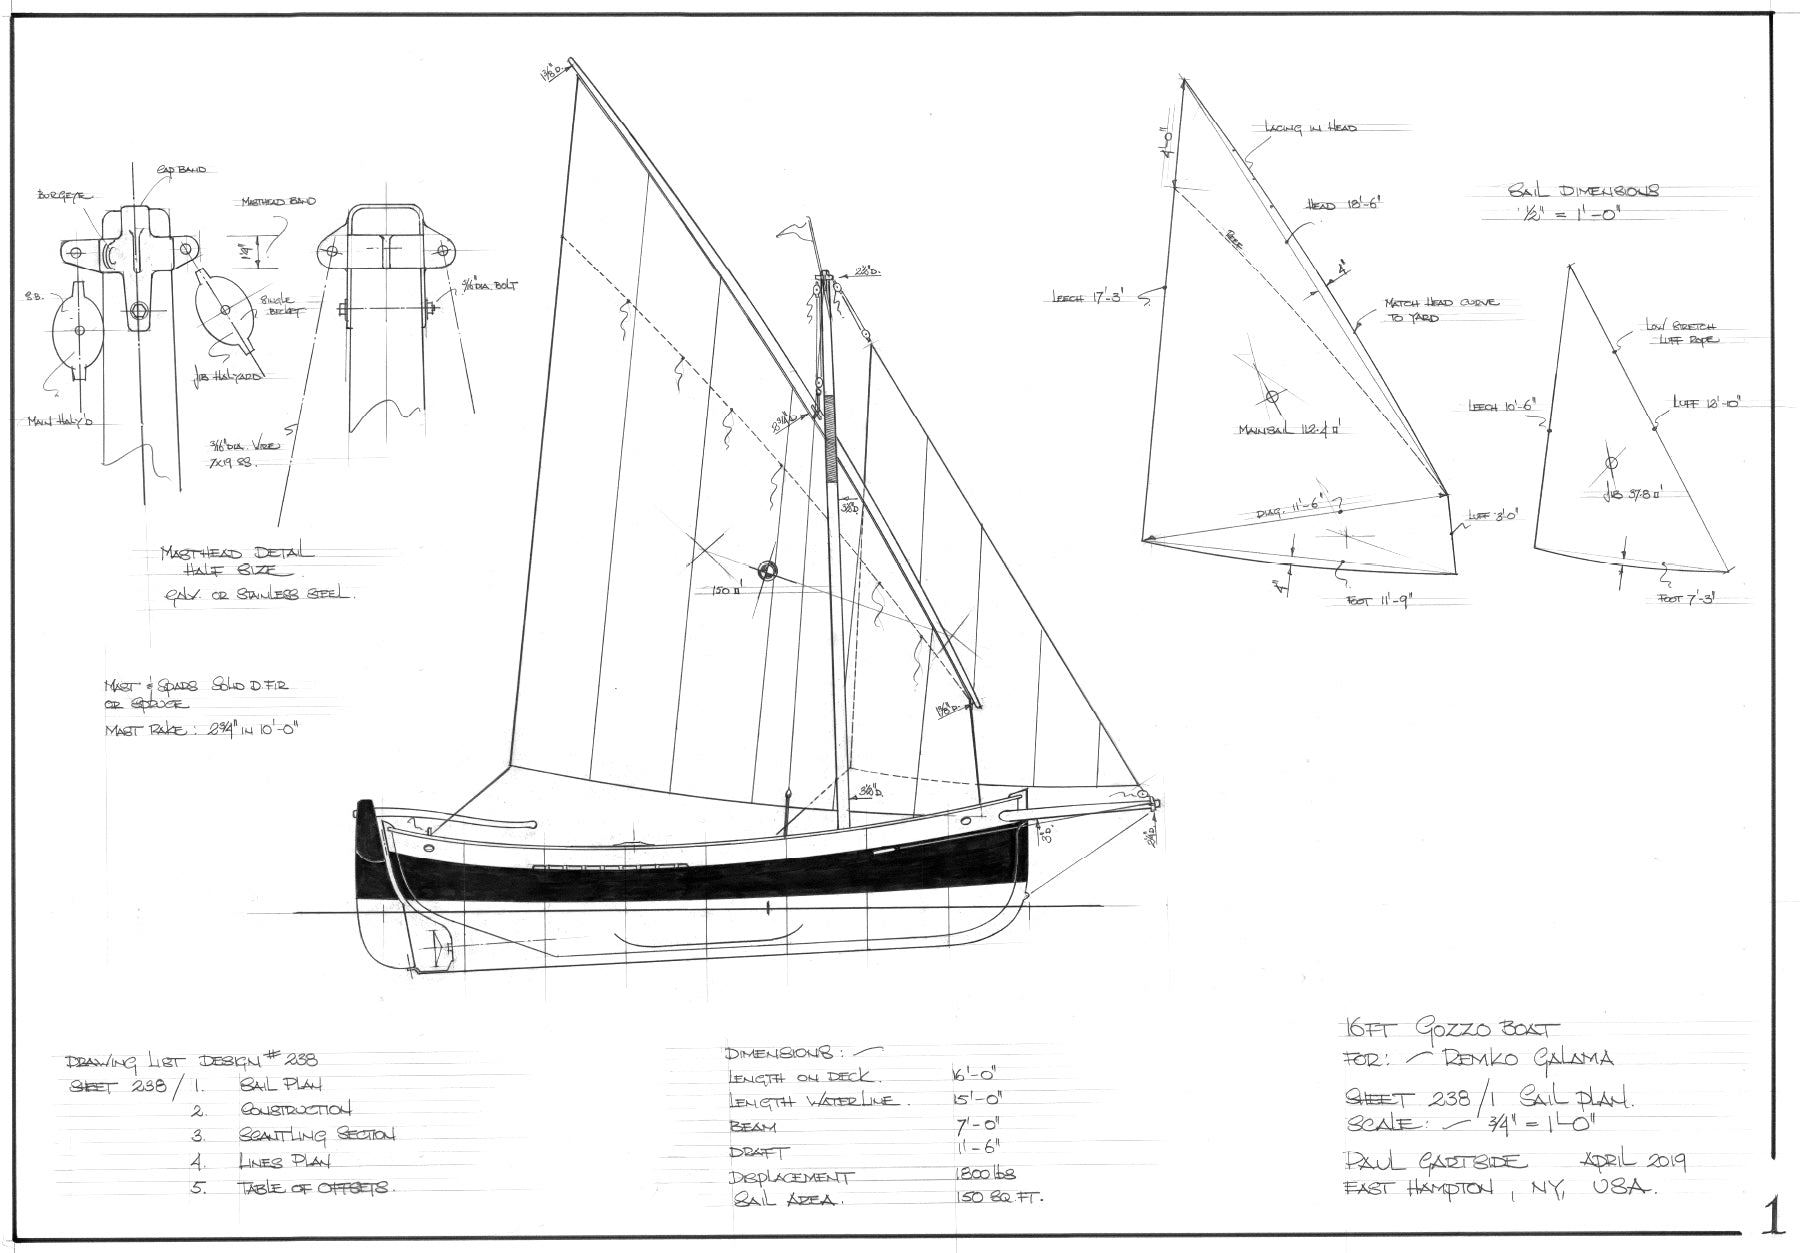 Gartside Boats | 16ft Gozzo boat. Design #238